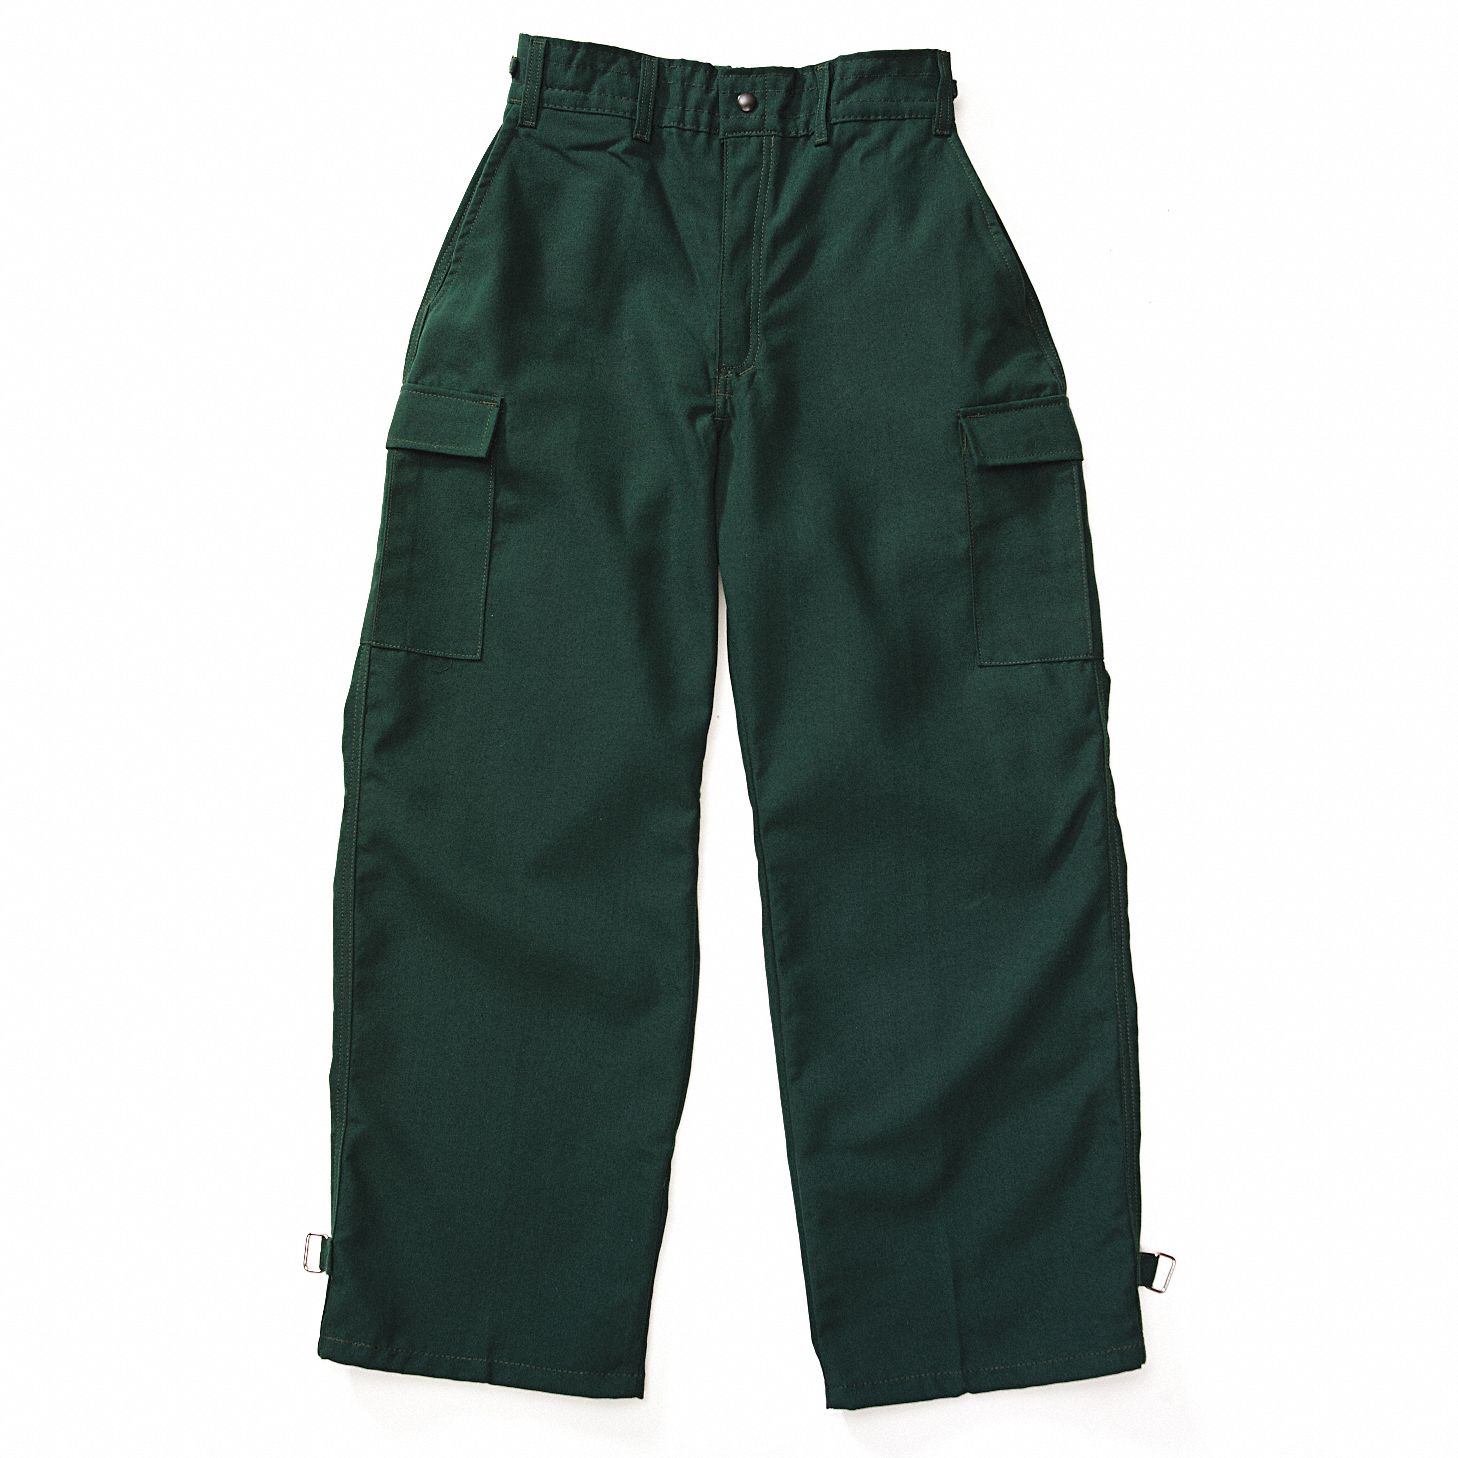 Wildland Fire Pants: XL, 39 to 43 in Fits Waist Size, 32 in Inseam, Green